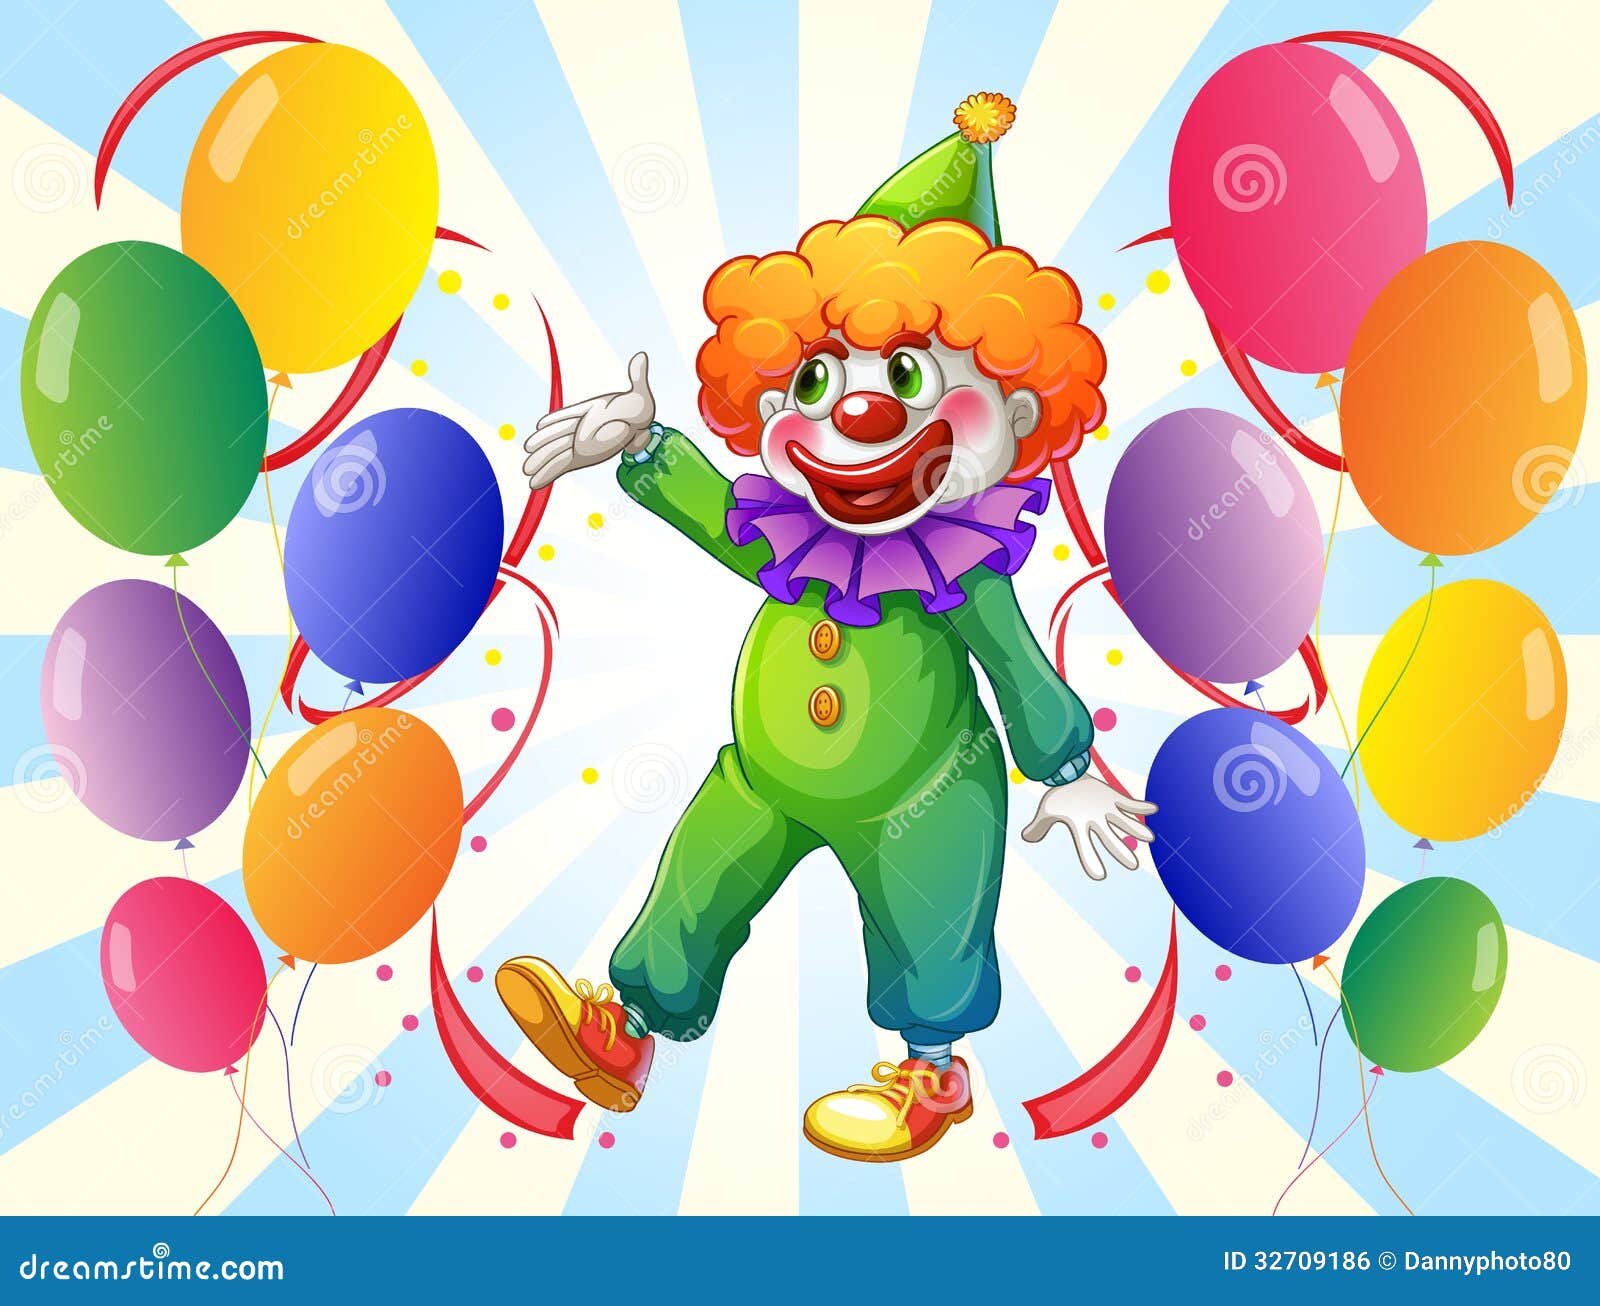 Клоун с шарами. Клоун с воздушными шариками. Иллюстрация клоуна с шариками. Клоун с воздушными шарами картина.